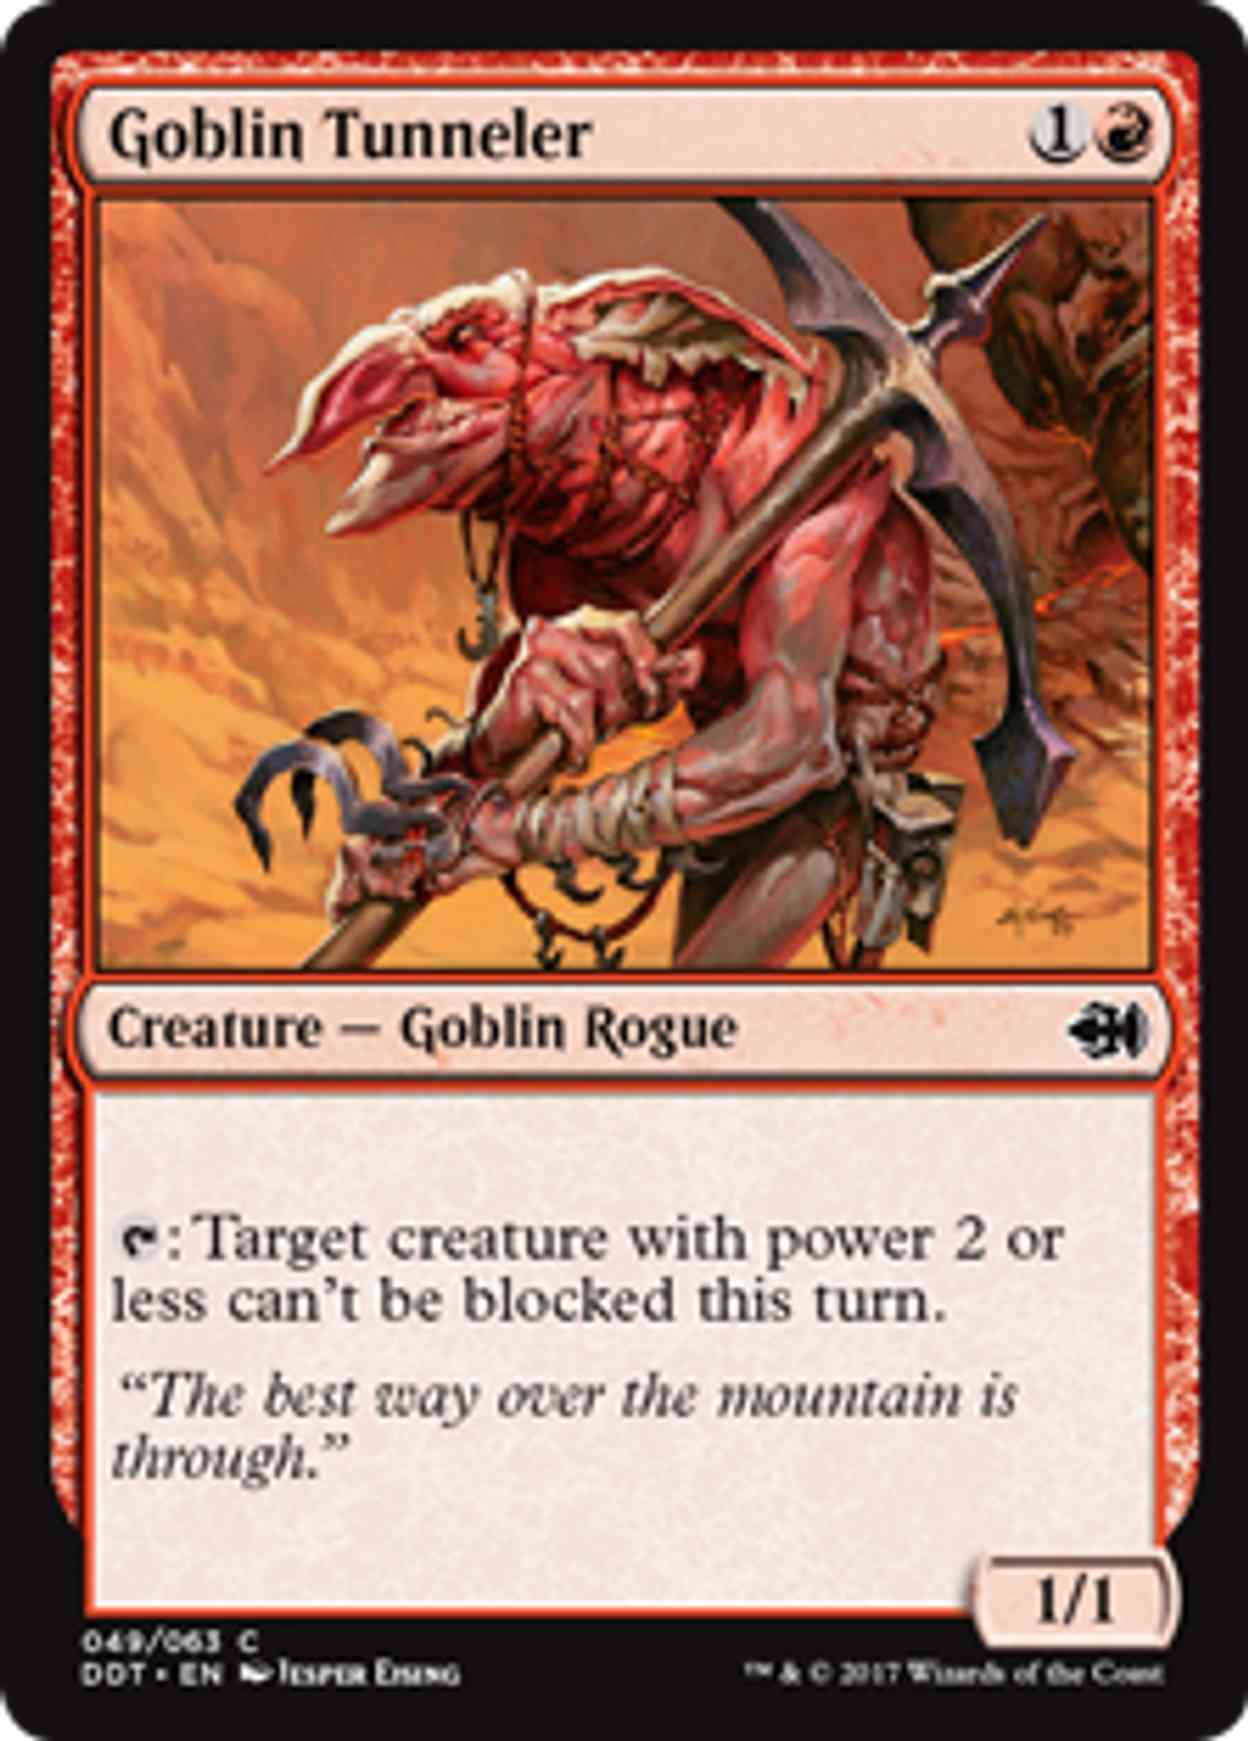 Goblin Tunneler magic card front